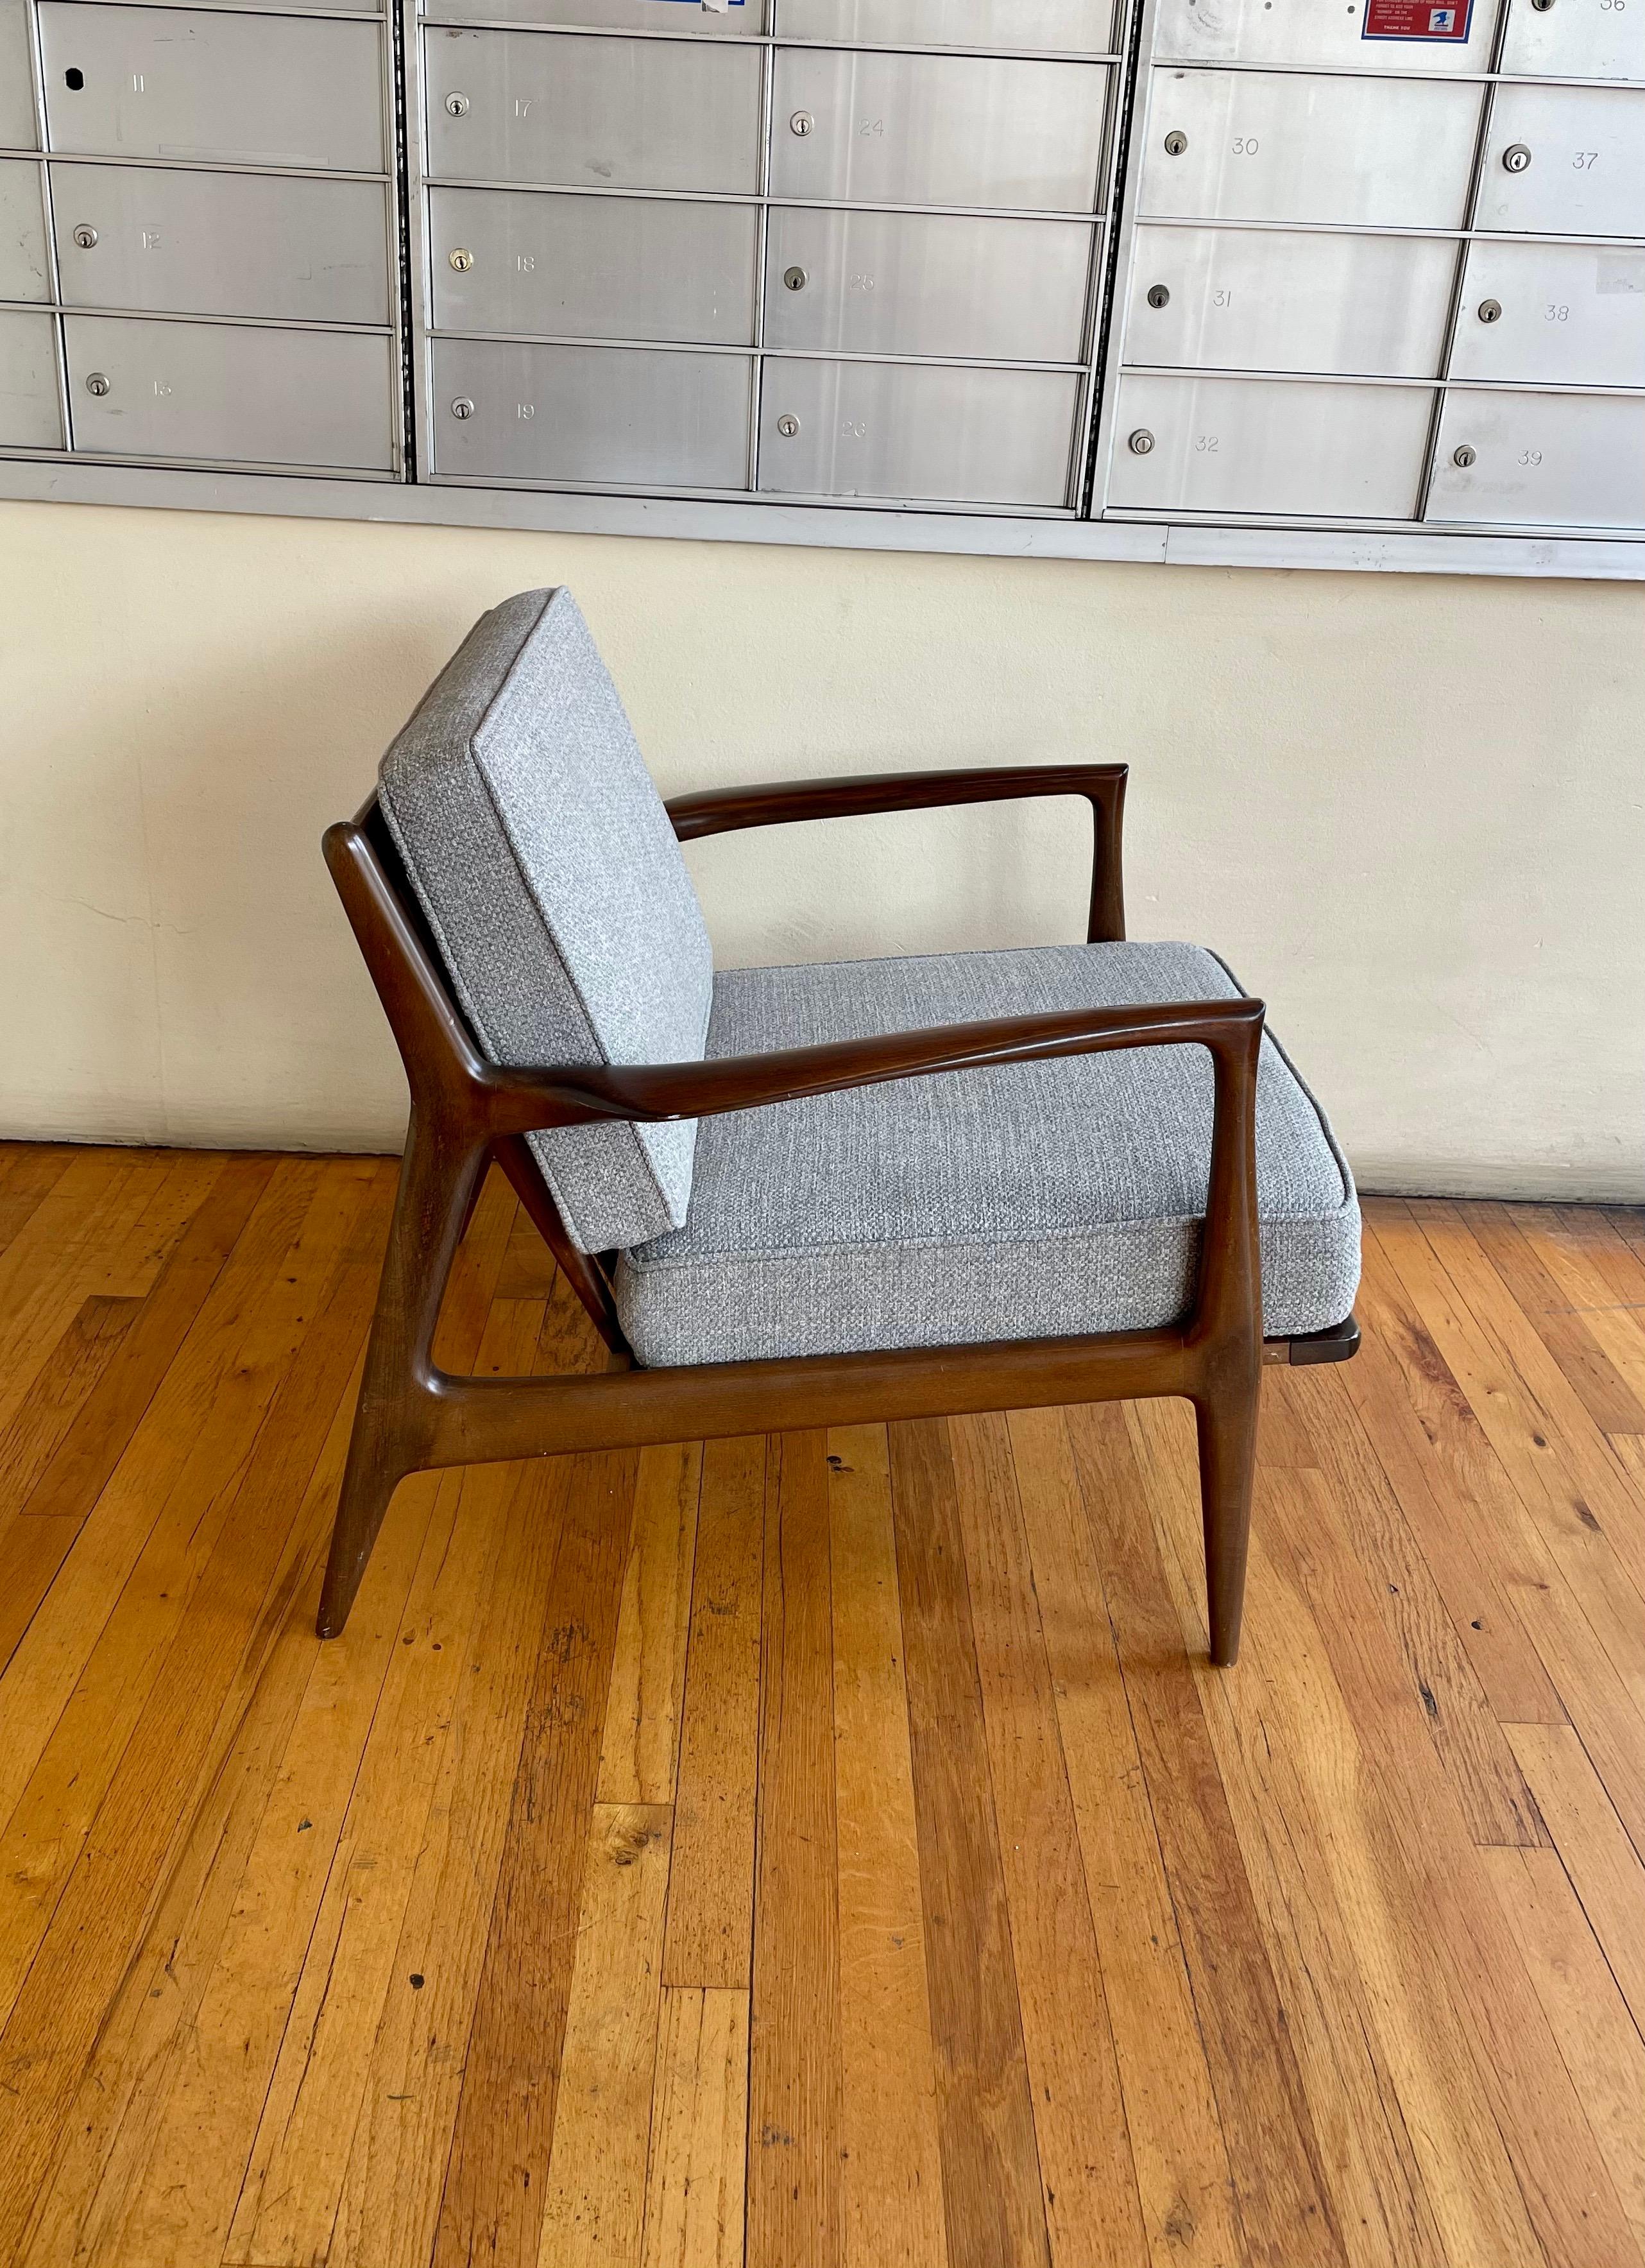 Pair of Danish Modern Lounge Chairs by Ib Kofod-Larsen for Selig 1